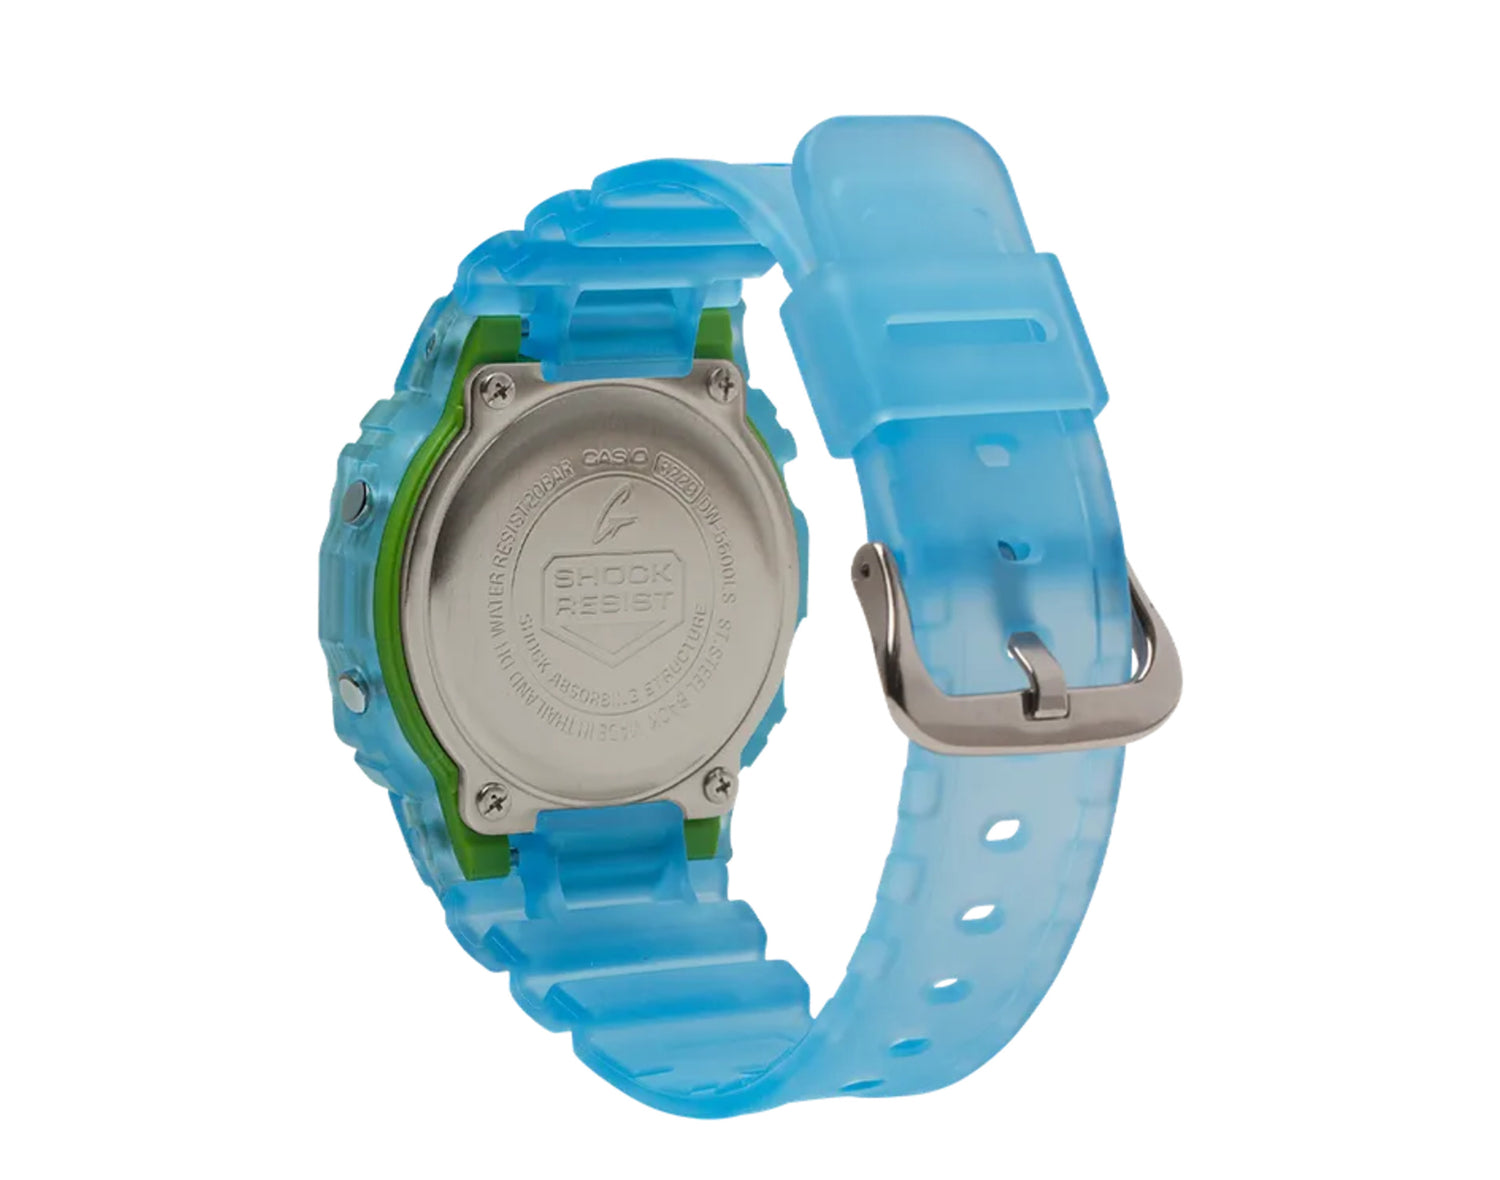 Casio G-Shock DW5600 Semi-Transparent Digital Resin Watch